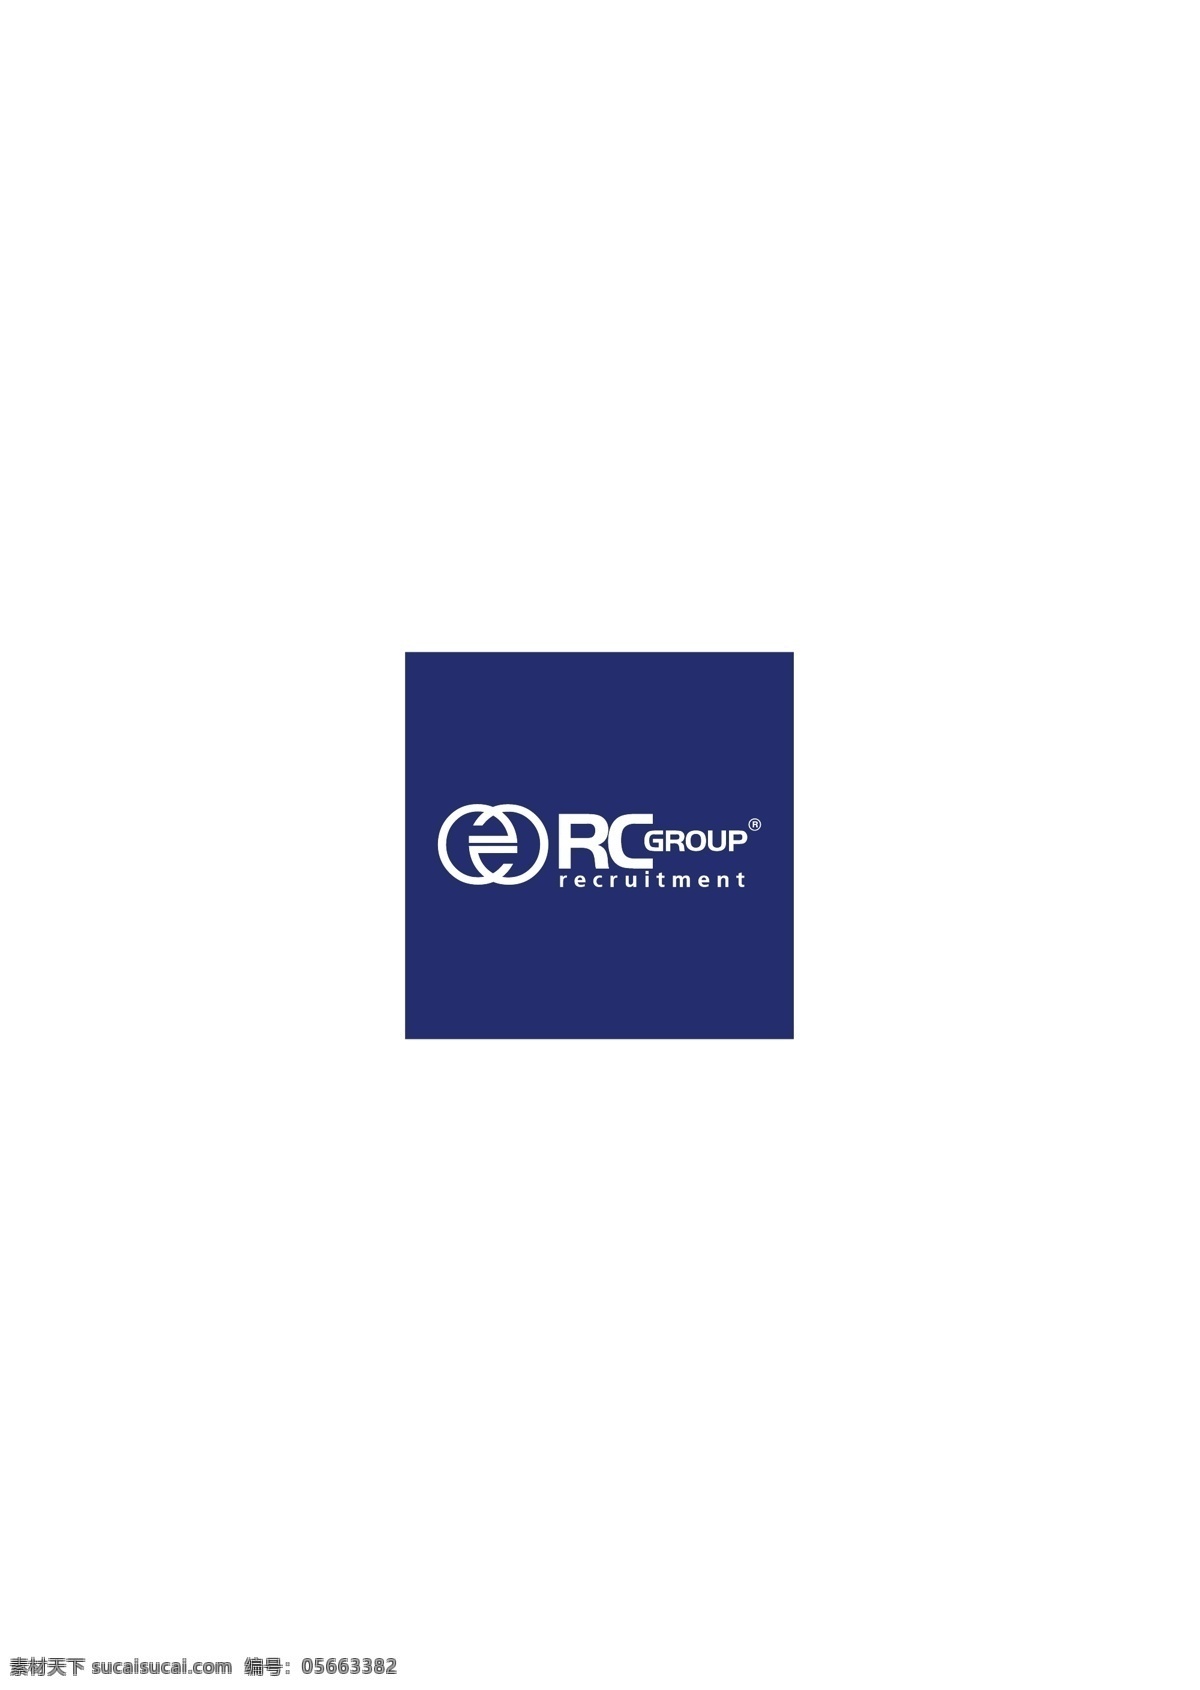 logo大全 logo 设计欣赏 商业矢量 矢量下载 rcgroup3 服务 行业 标志设计 欣赏 网页矢量 矢量图 其他矢量图